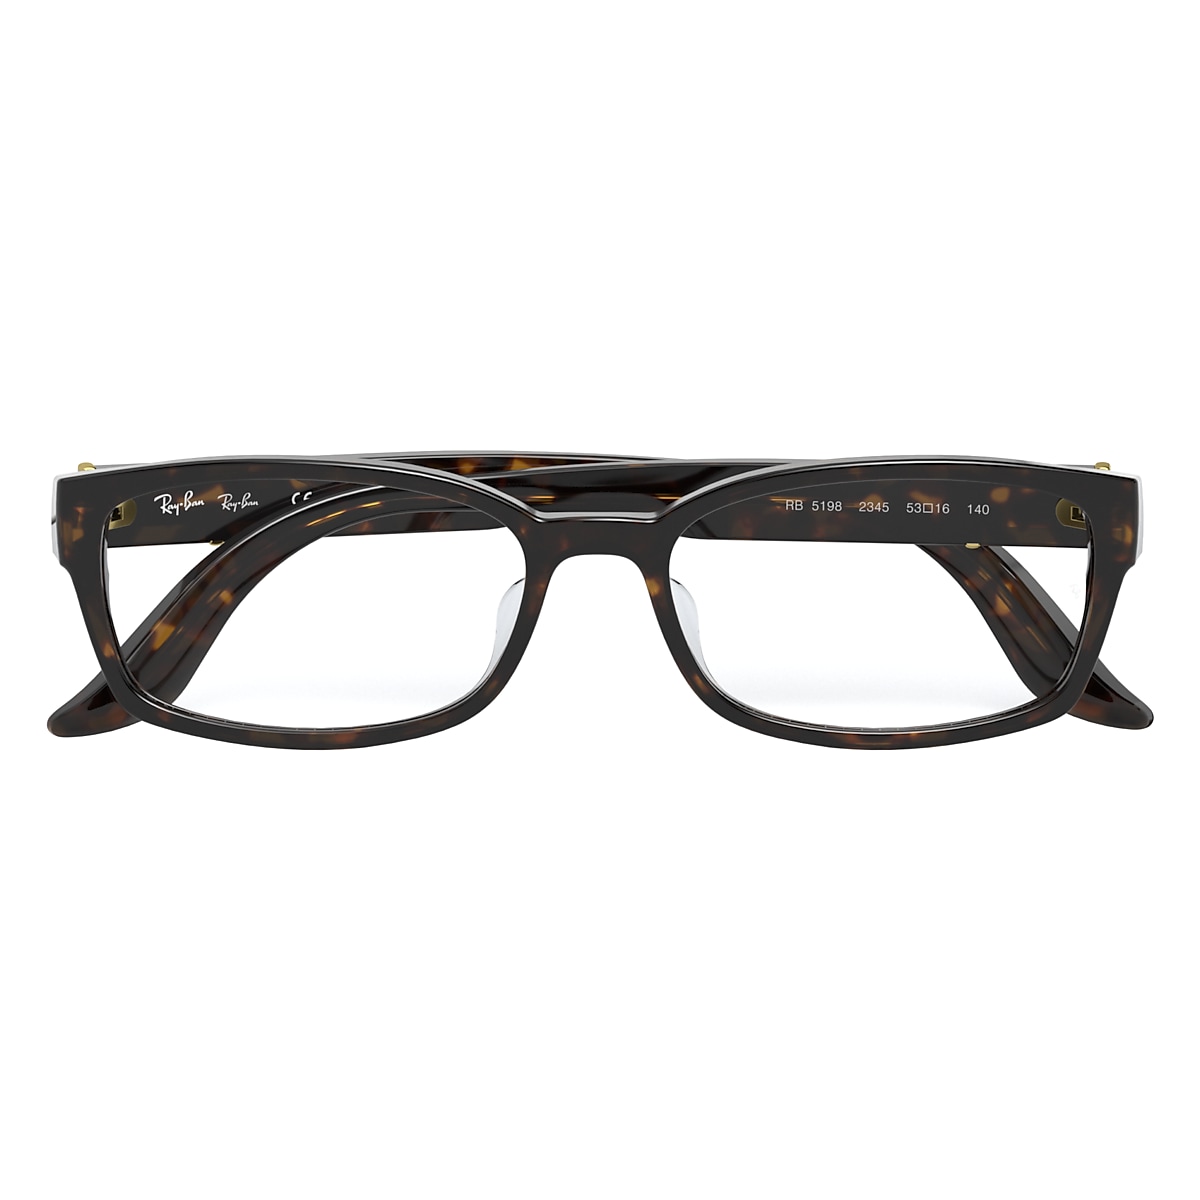 RB5198 OPTICS Eyeglasses with Tortoise Frame - RB5198 | Ray-Ban® CA